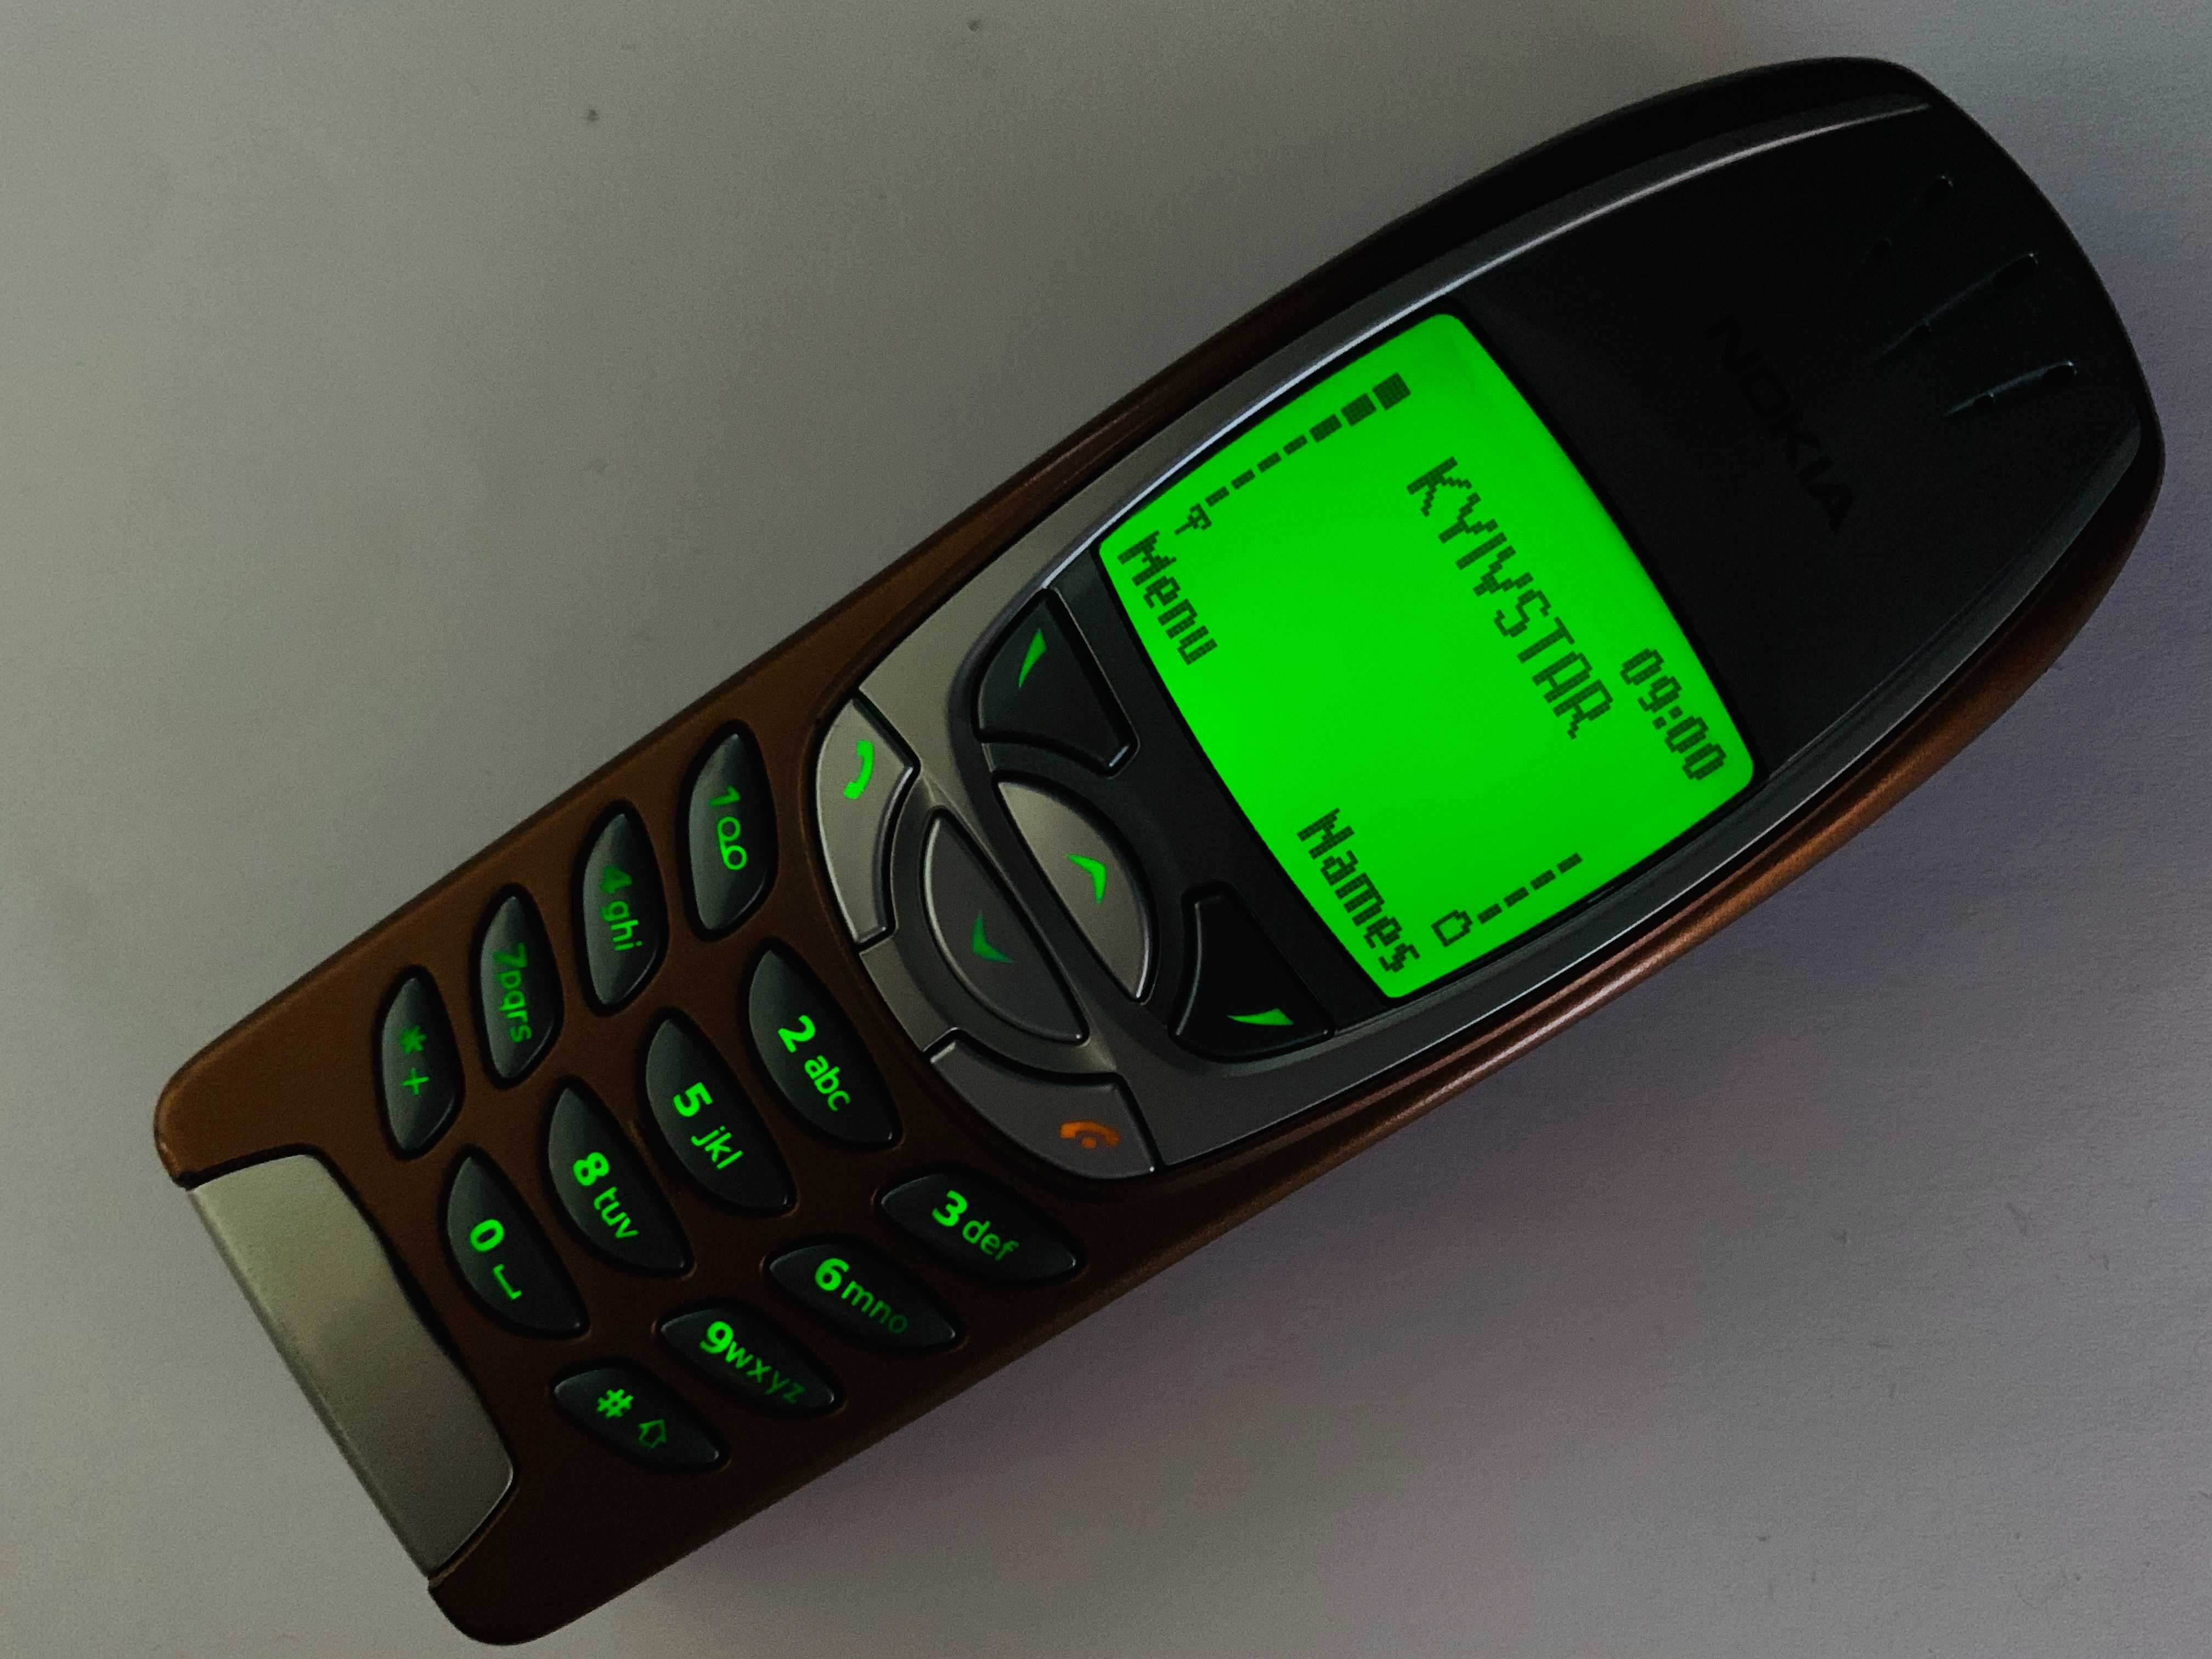 Nokia 6310 Sirocco Bronze  - Оригінал ! ретро раритет vintage phone